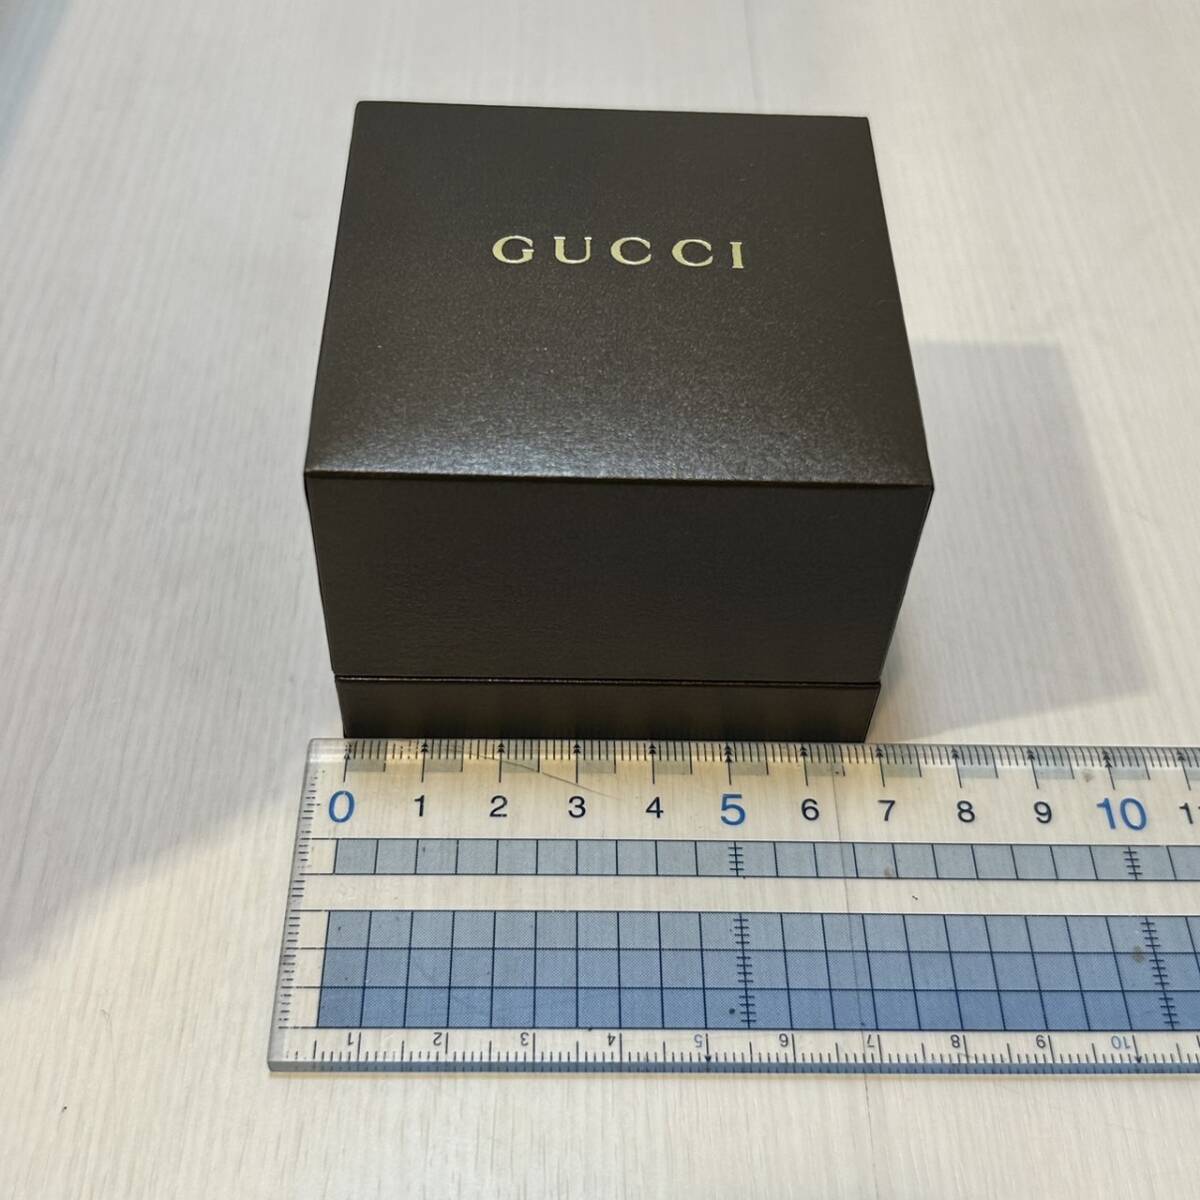 GUCCI / Gucci серьги аксессуары бренд серьги бренд GUCCI серьги женский мужской Gold AD1810